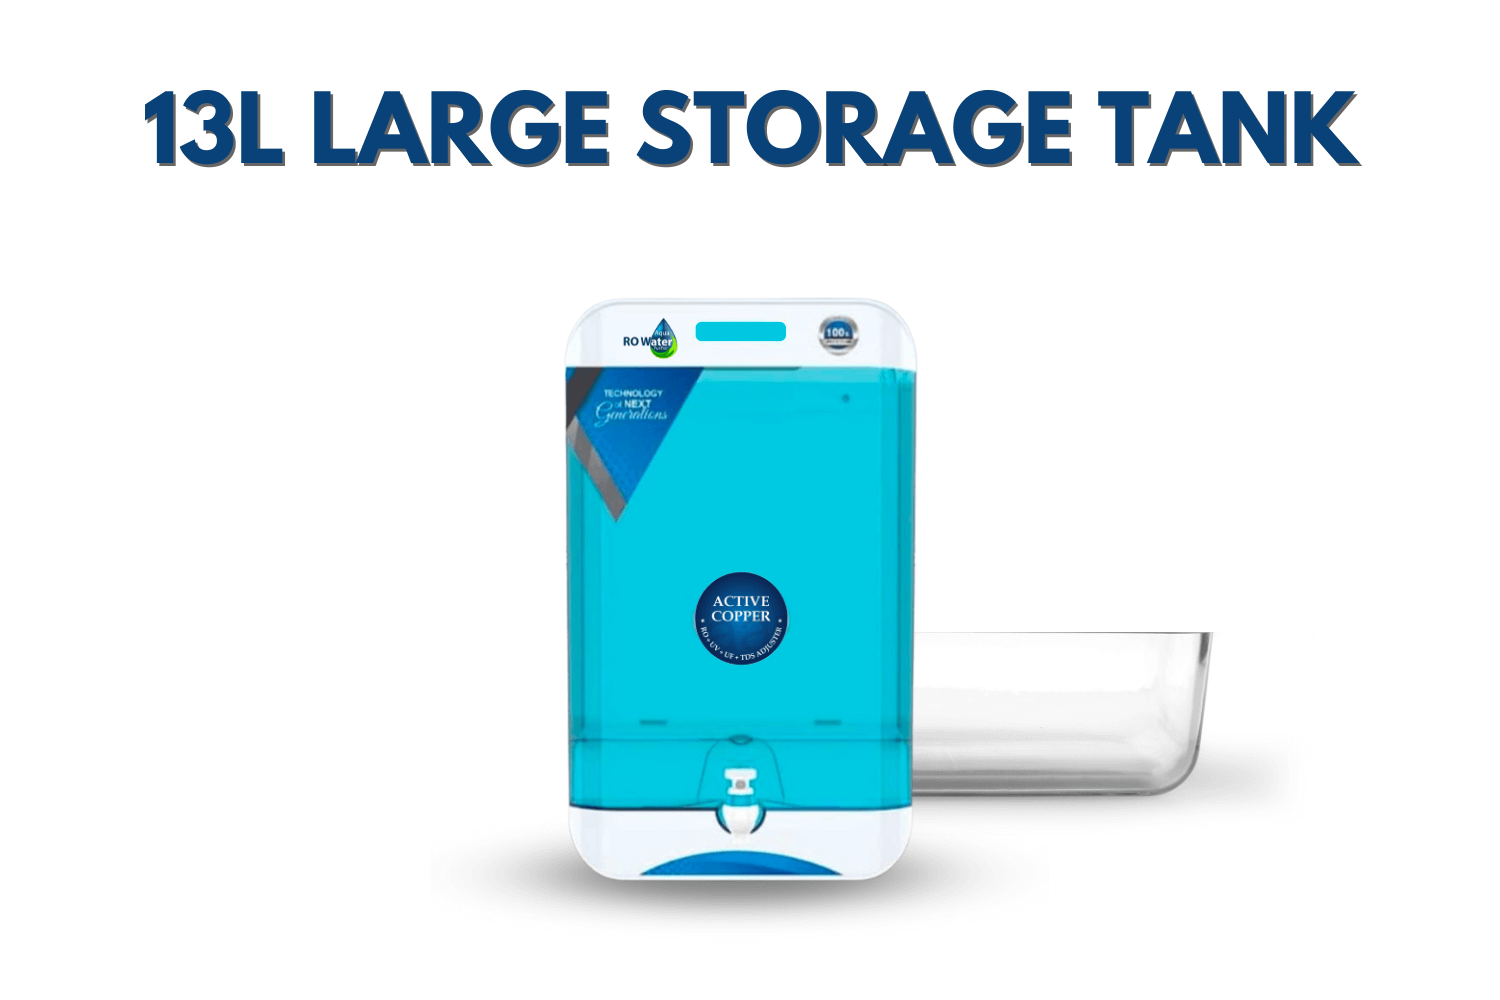 13L storage tank by Aqua RO Water Purifier